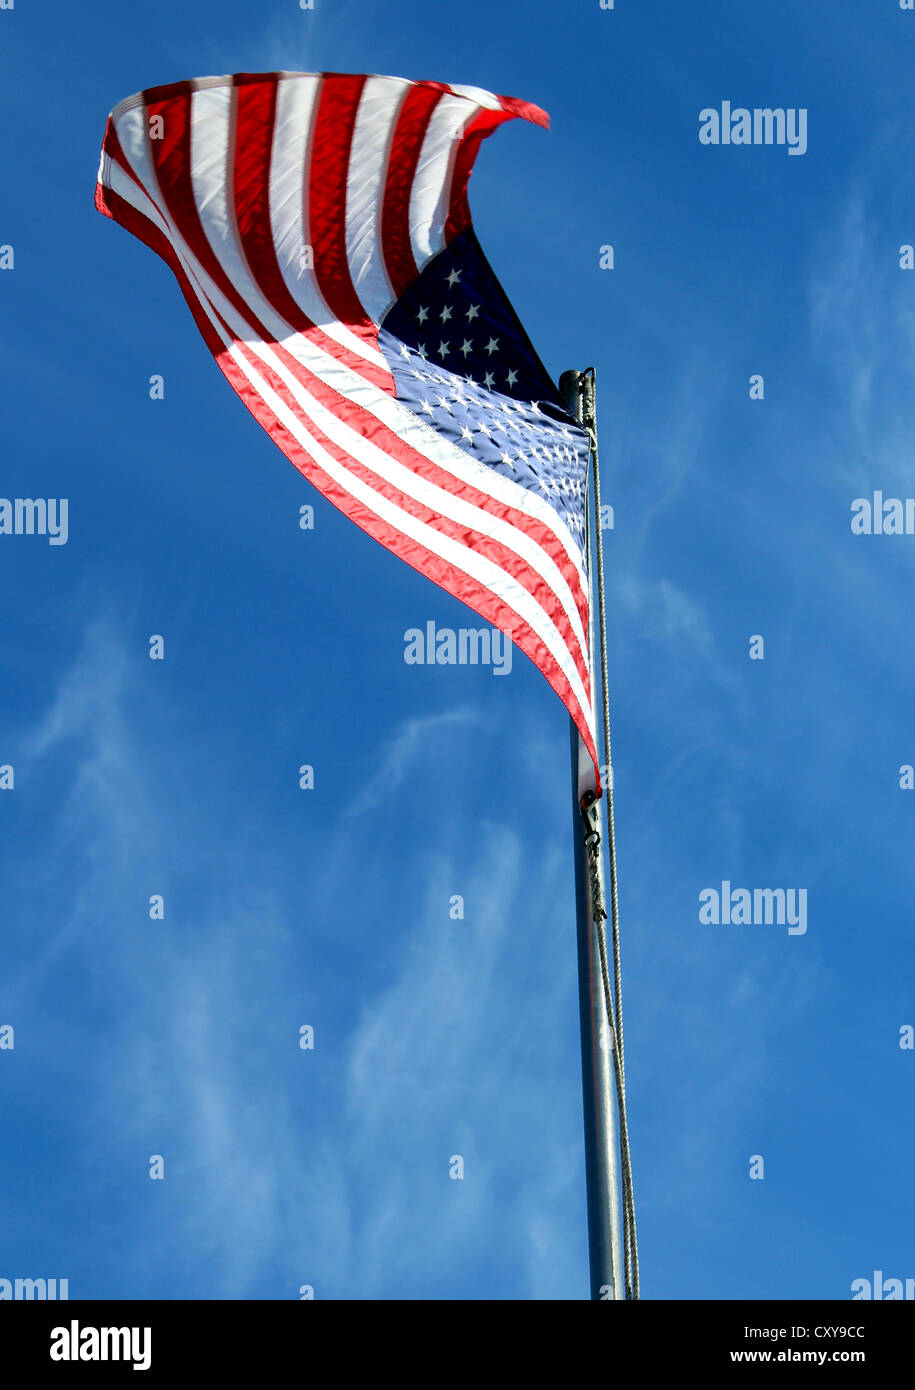 USA-Flagge, amerikanische Flagge, Flagge "Stars And Stripes" Vereinigte Staaten von Amerika Stockfoto